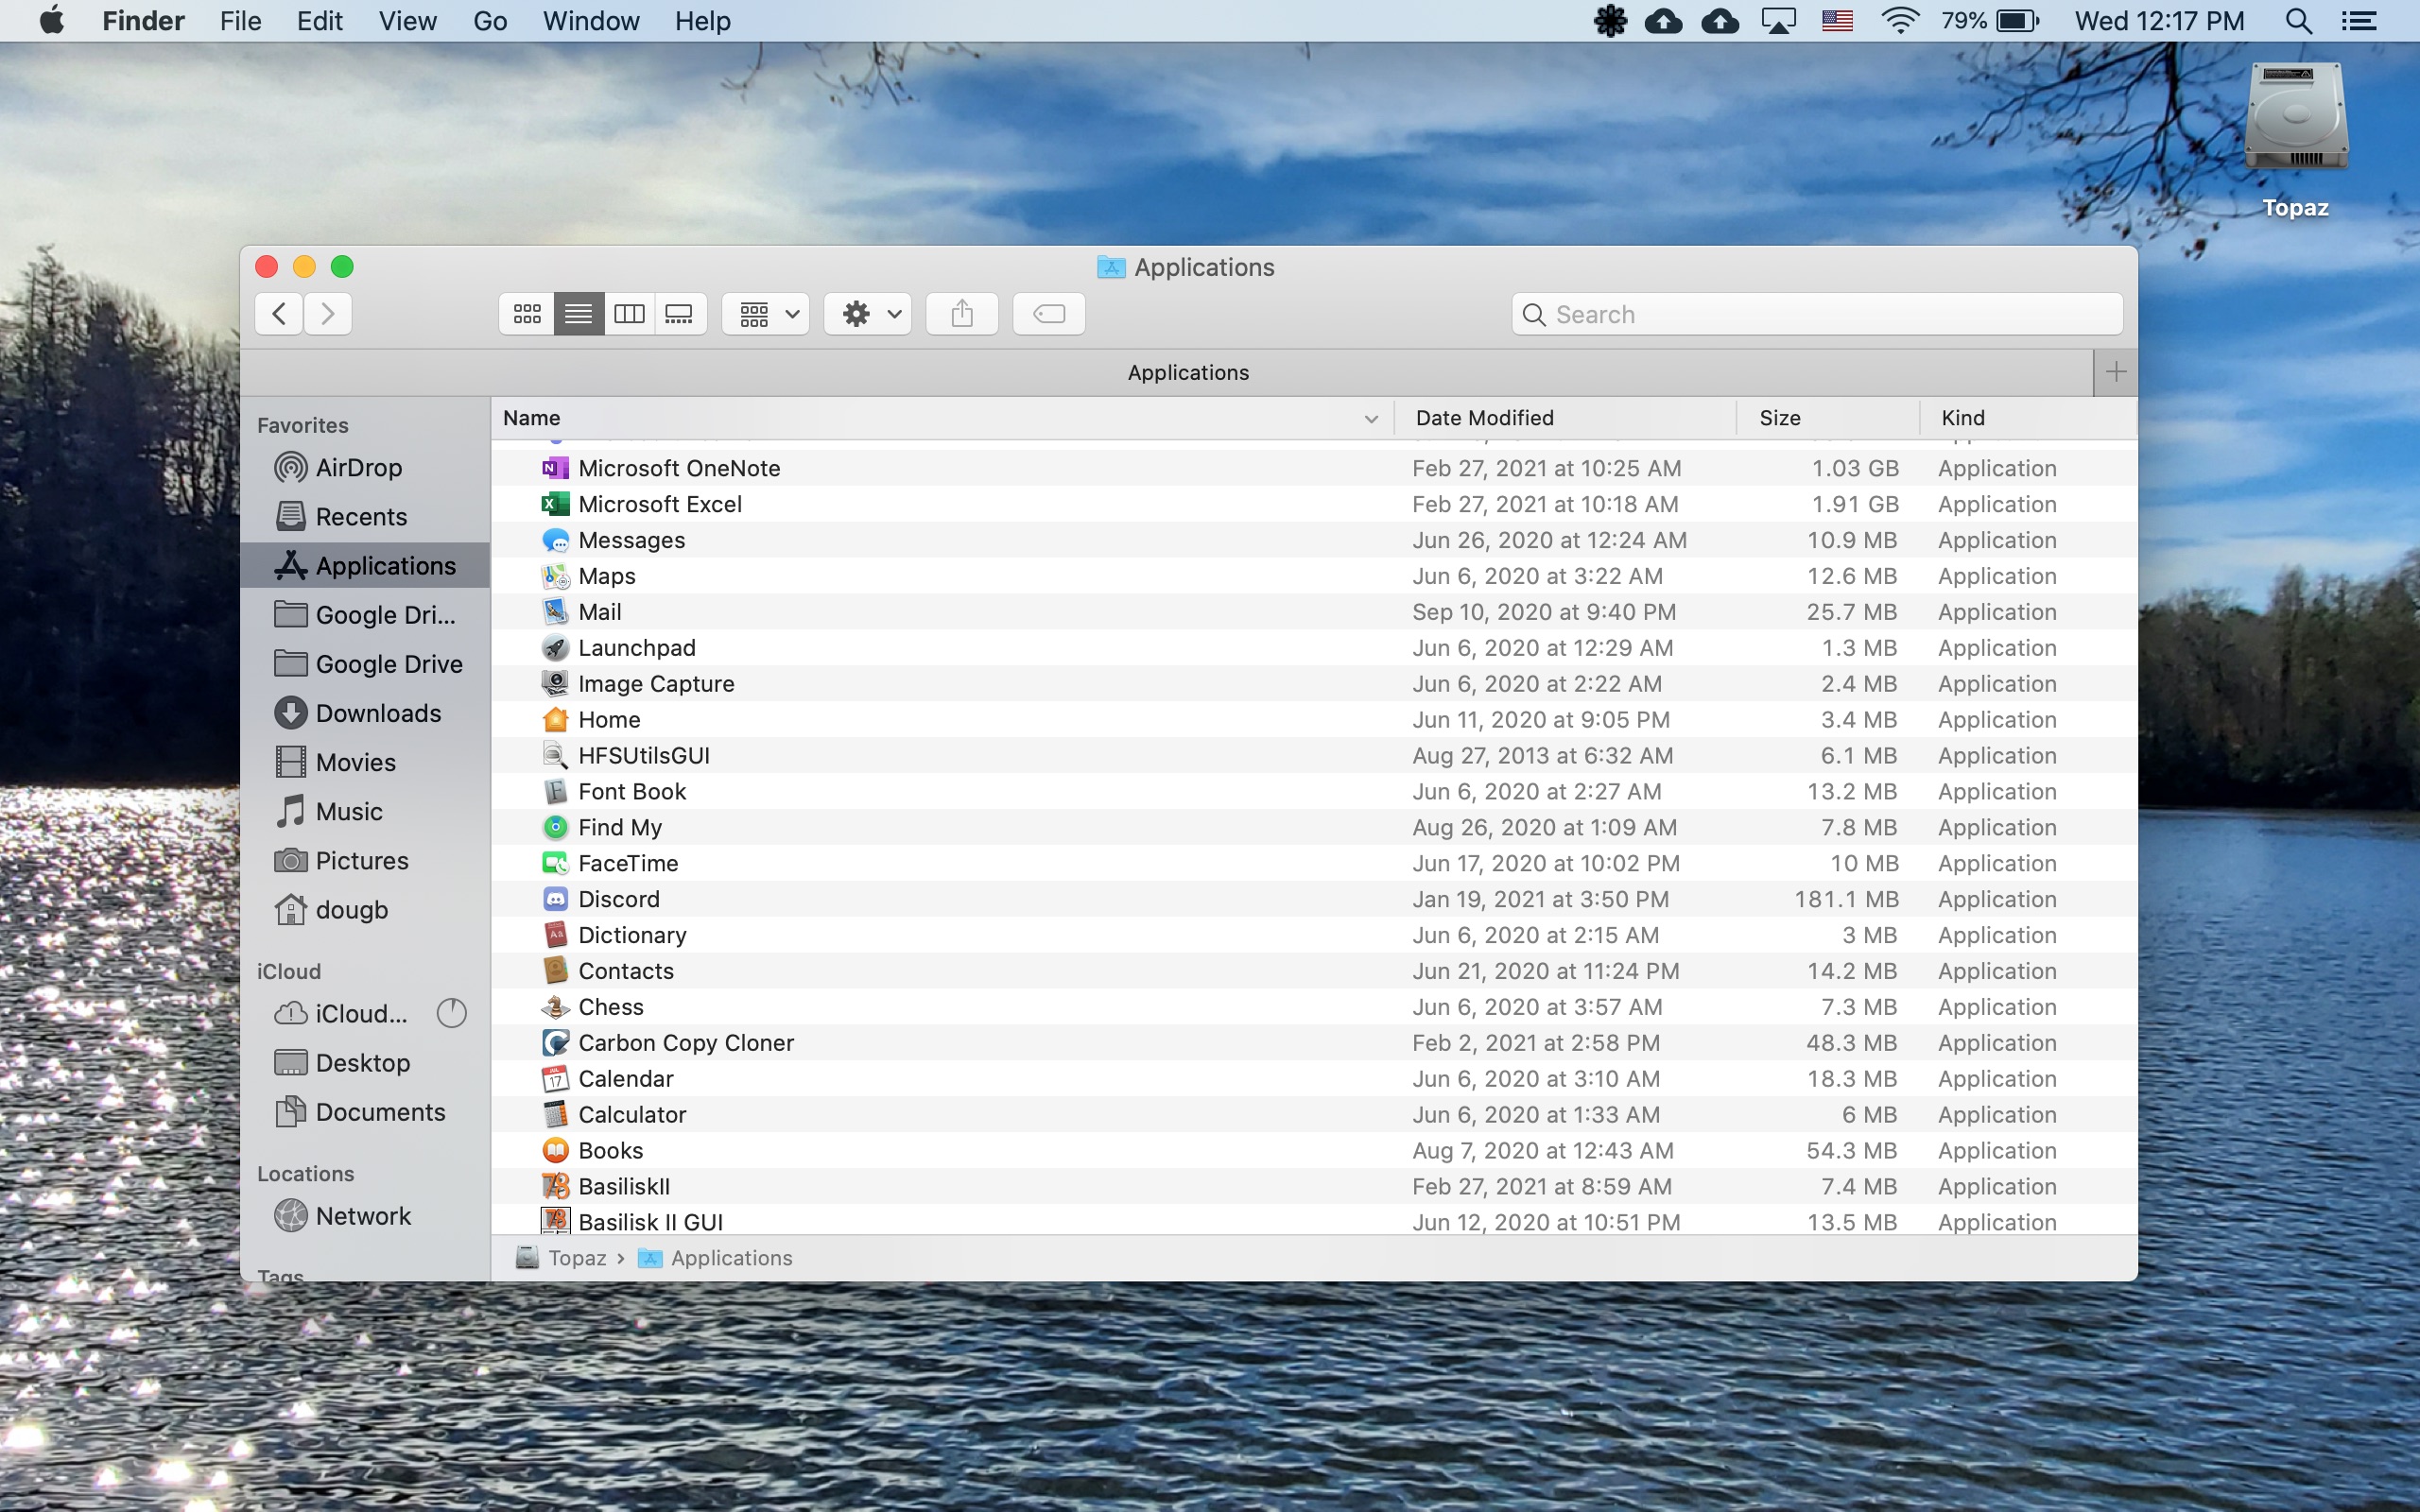 free for mac download Complete Internet Repair 9.1.3.6322